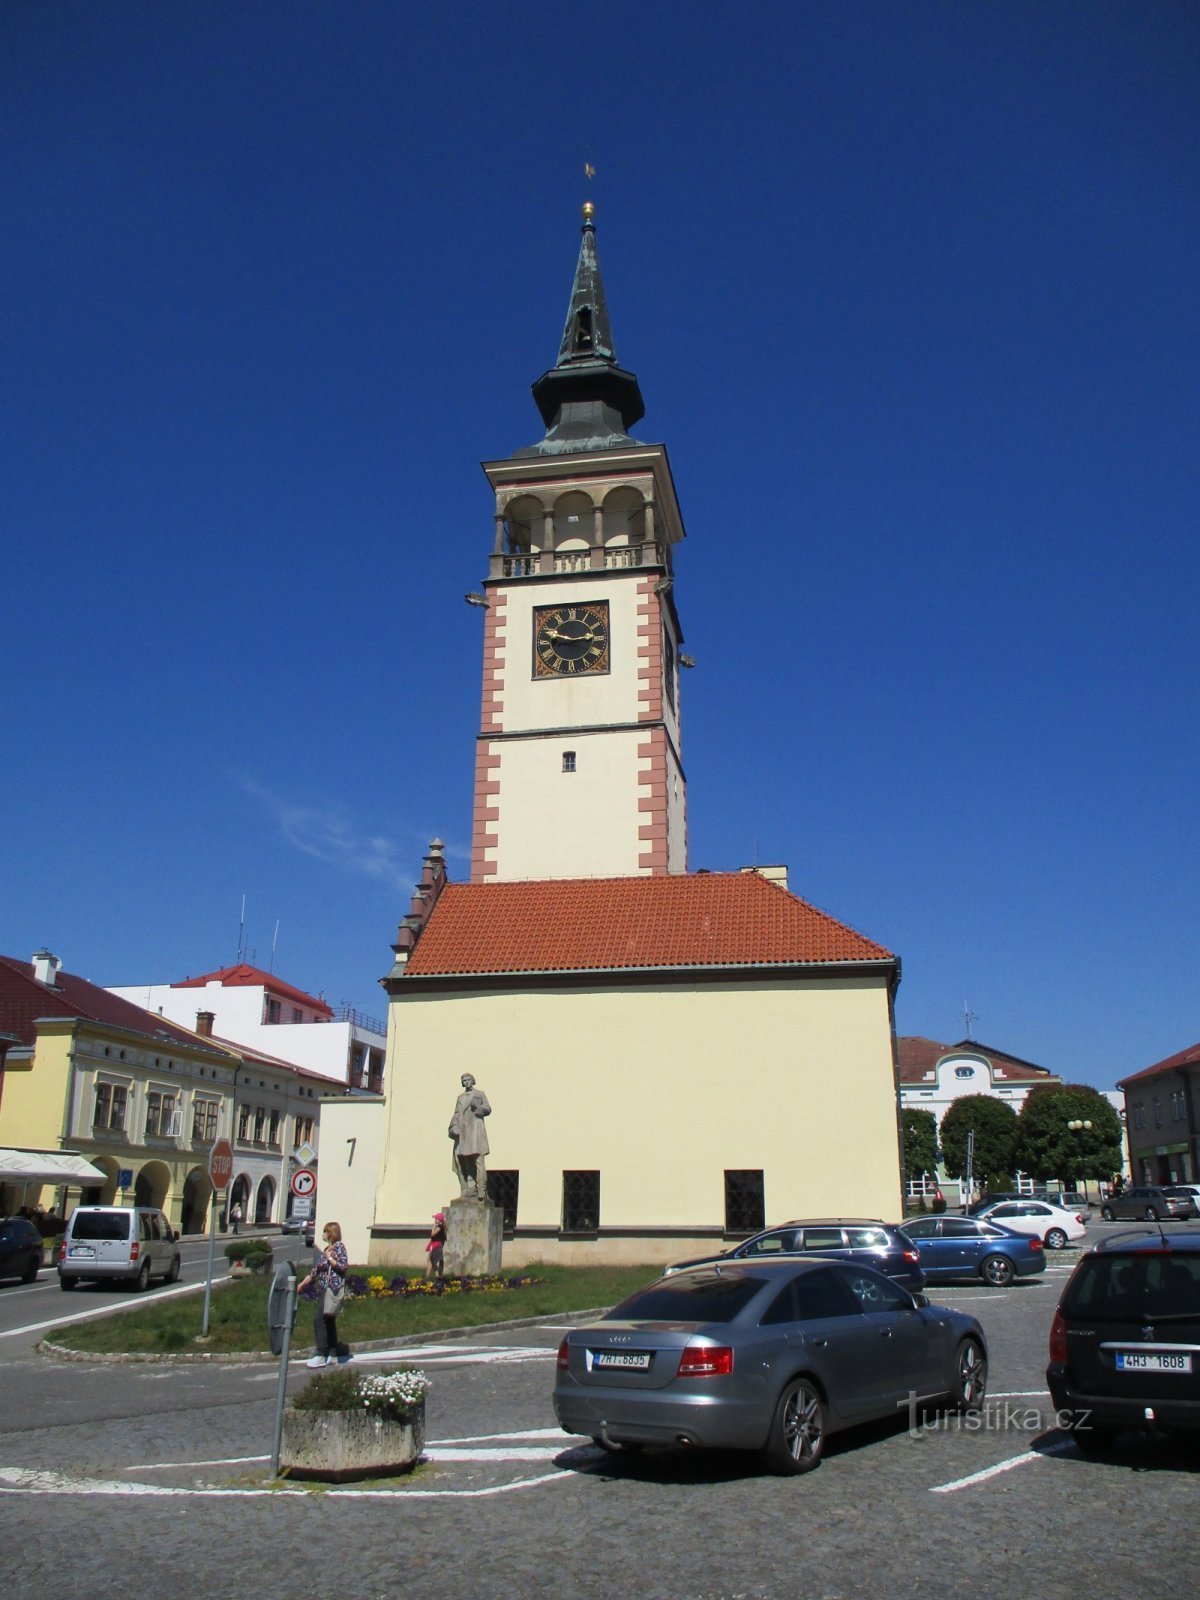 Town Hall Tower (Dobruška, 18.5.2020/XNUMX/XNUMX)